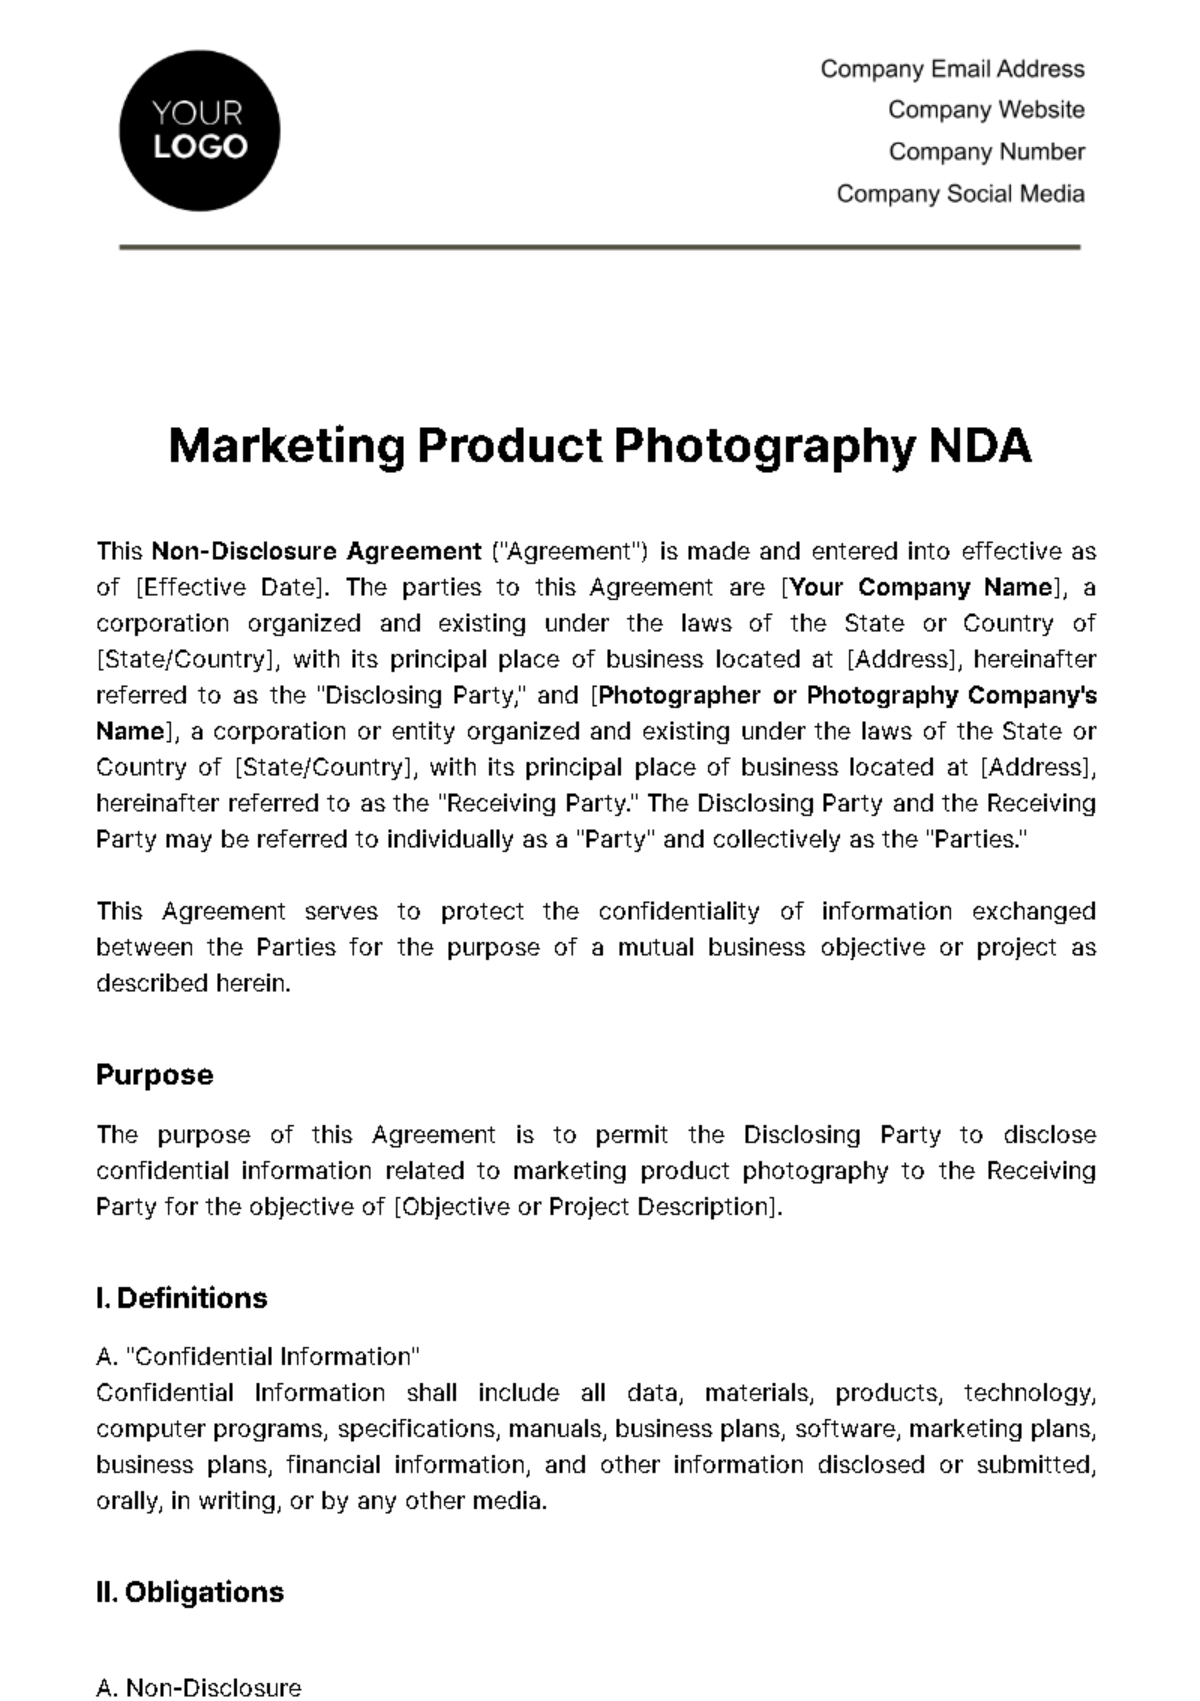 Free Marketing Product Photography NDA Template